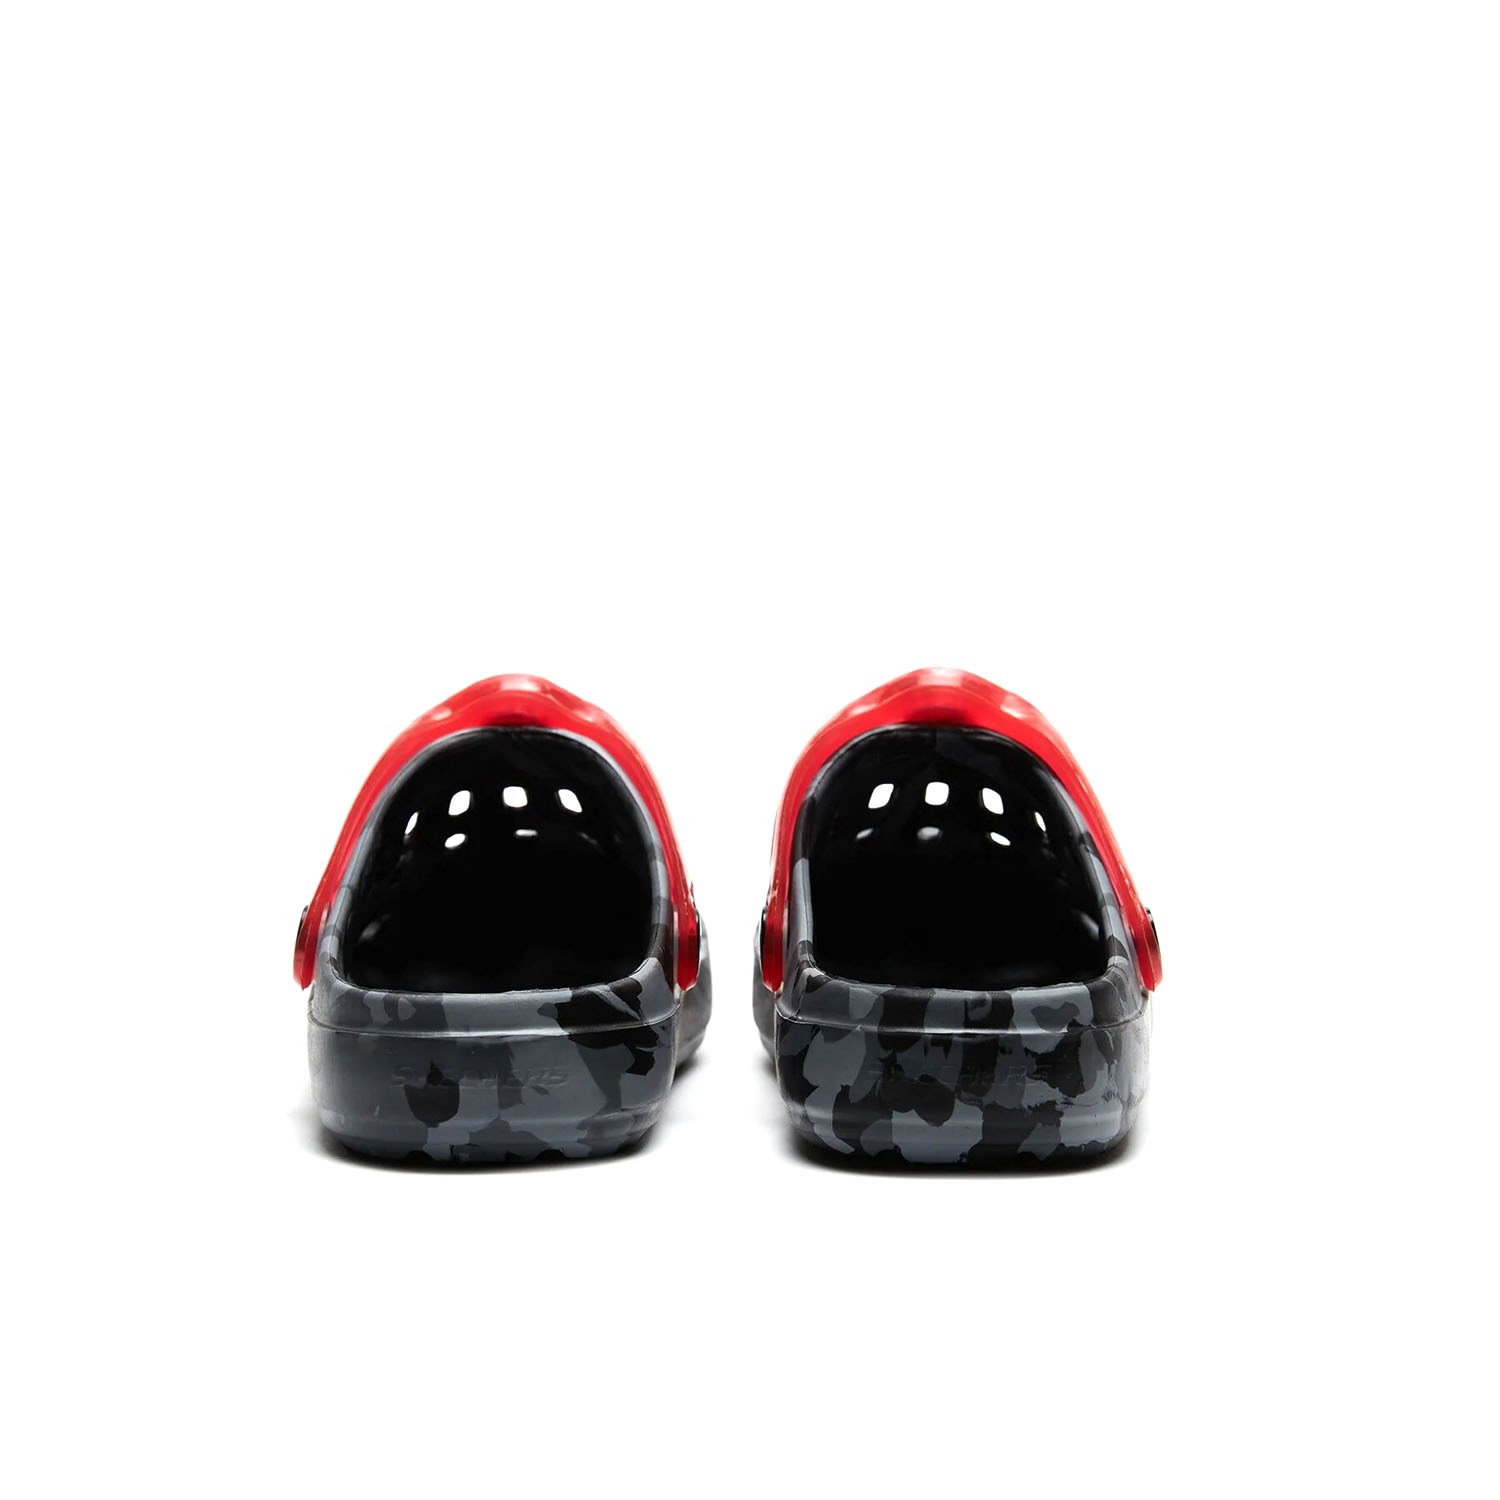 Skechers Swifters Çocuk Işıklı Terlik Charcoal - Black